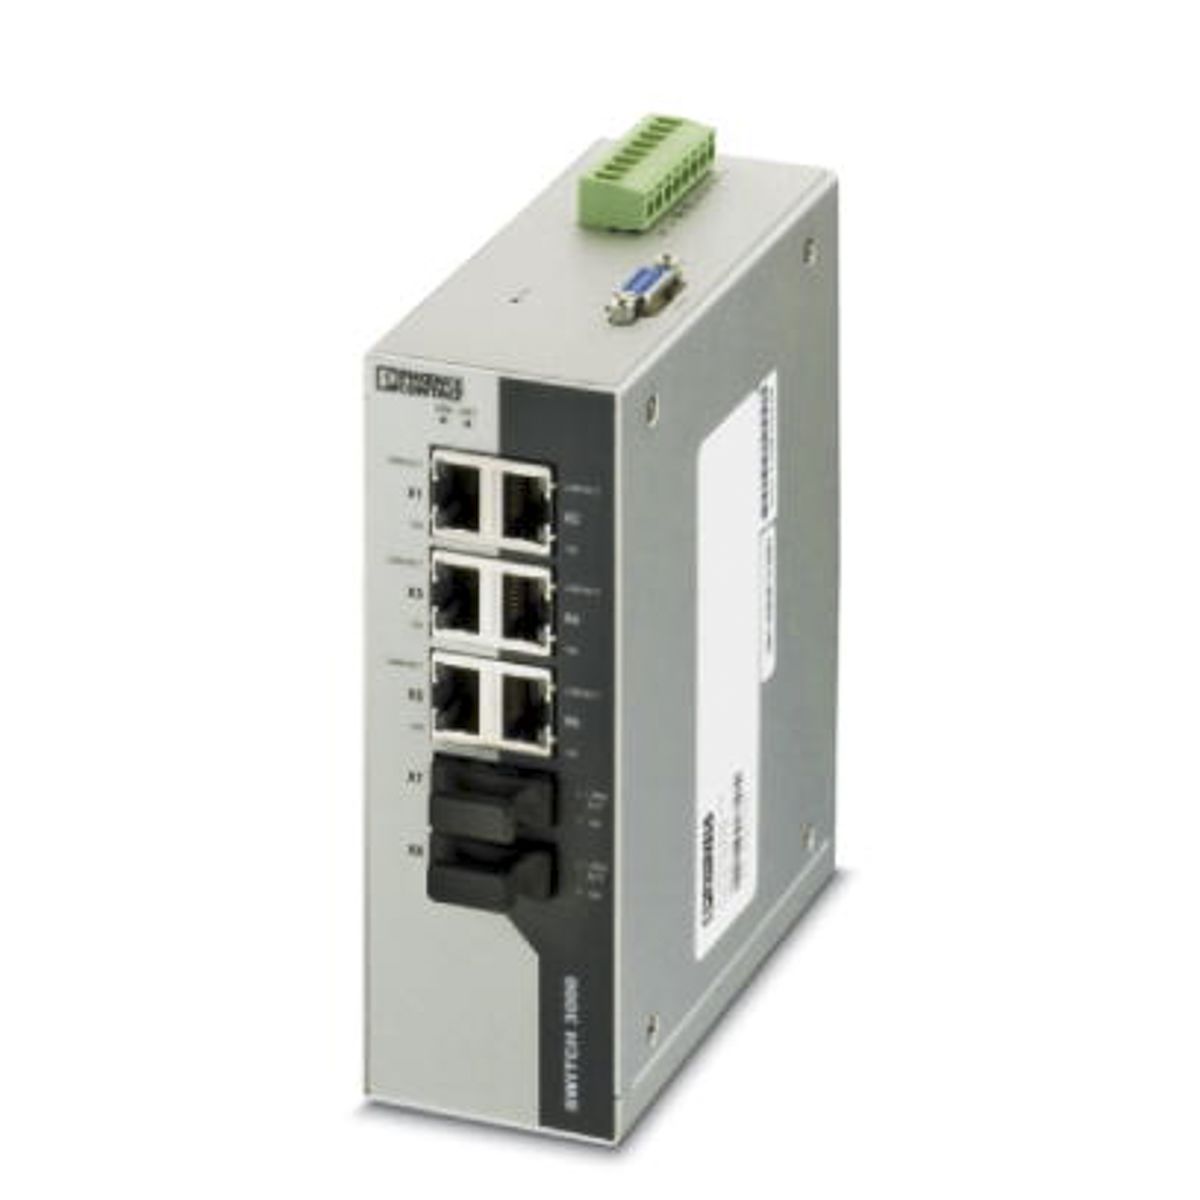 Phoenix Contact DIN Rail Mount Ethernet Switch, 6 RJ45 port, 24V dc, 100Mbit/s Transmission Speed